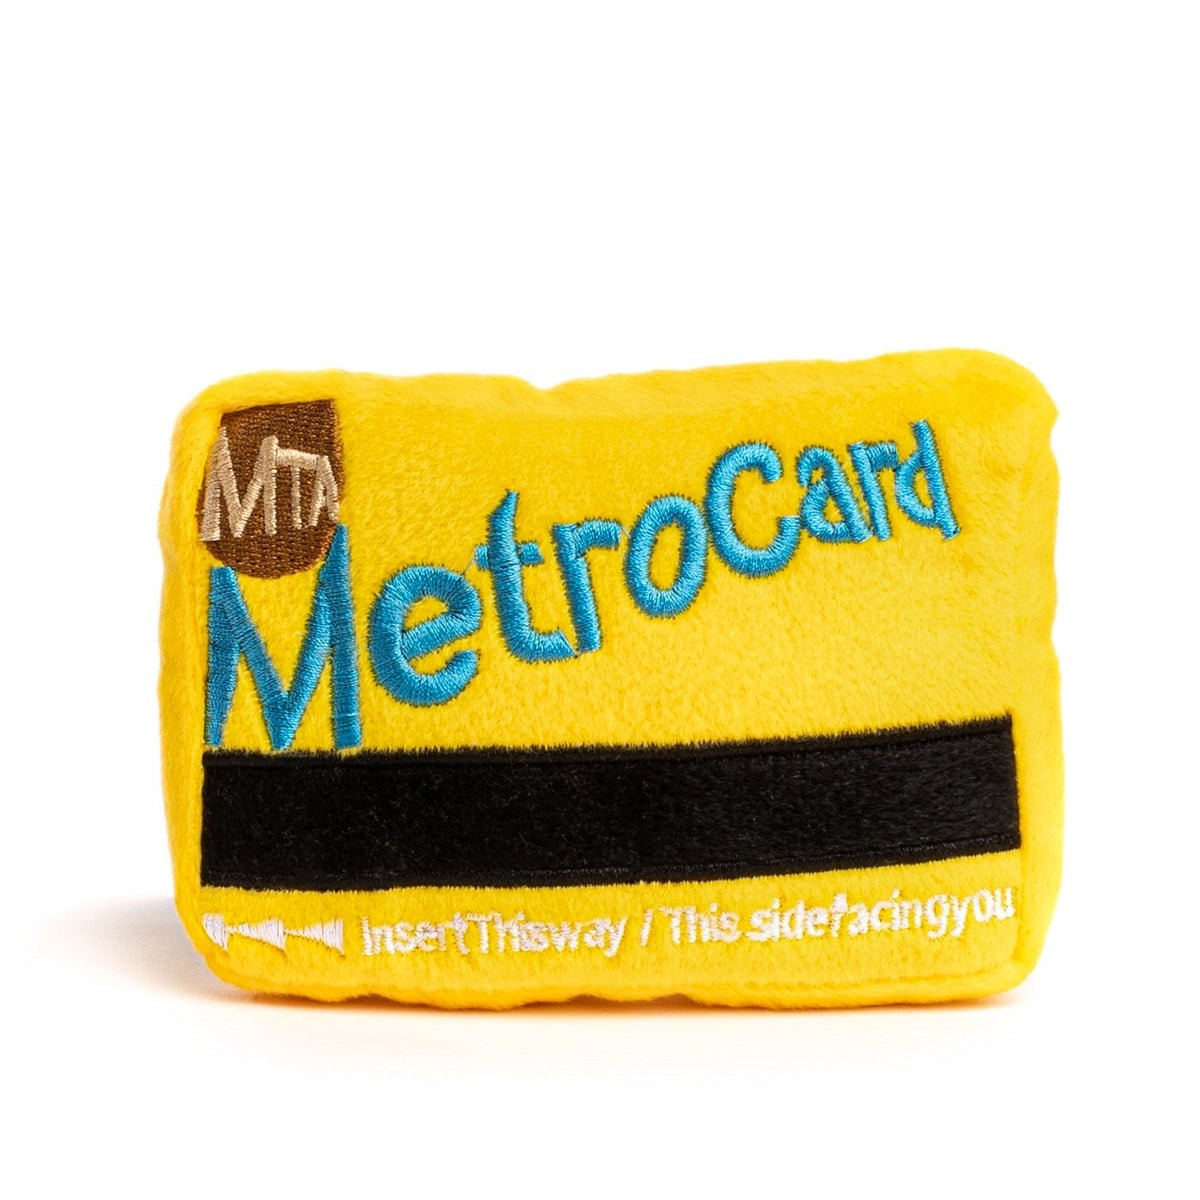 MTA NYC Metrocard Plush Dog Toy